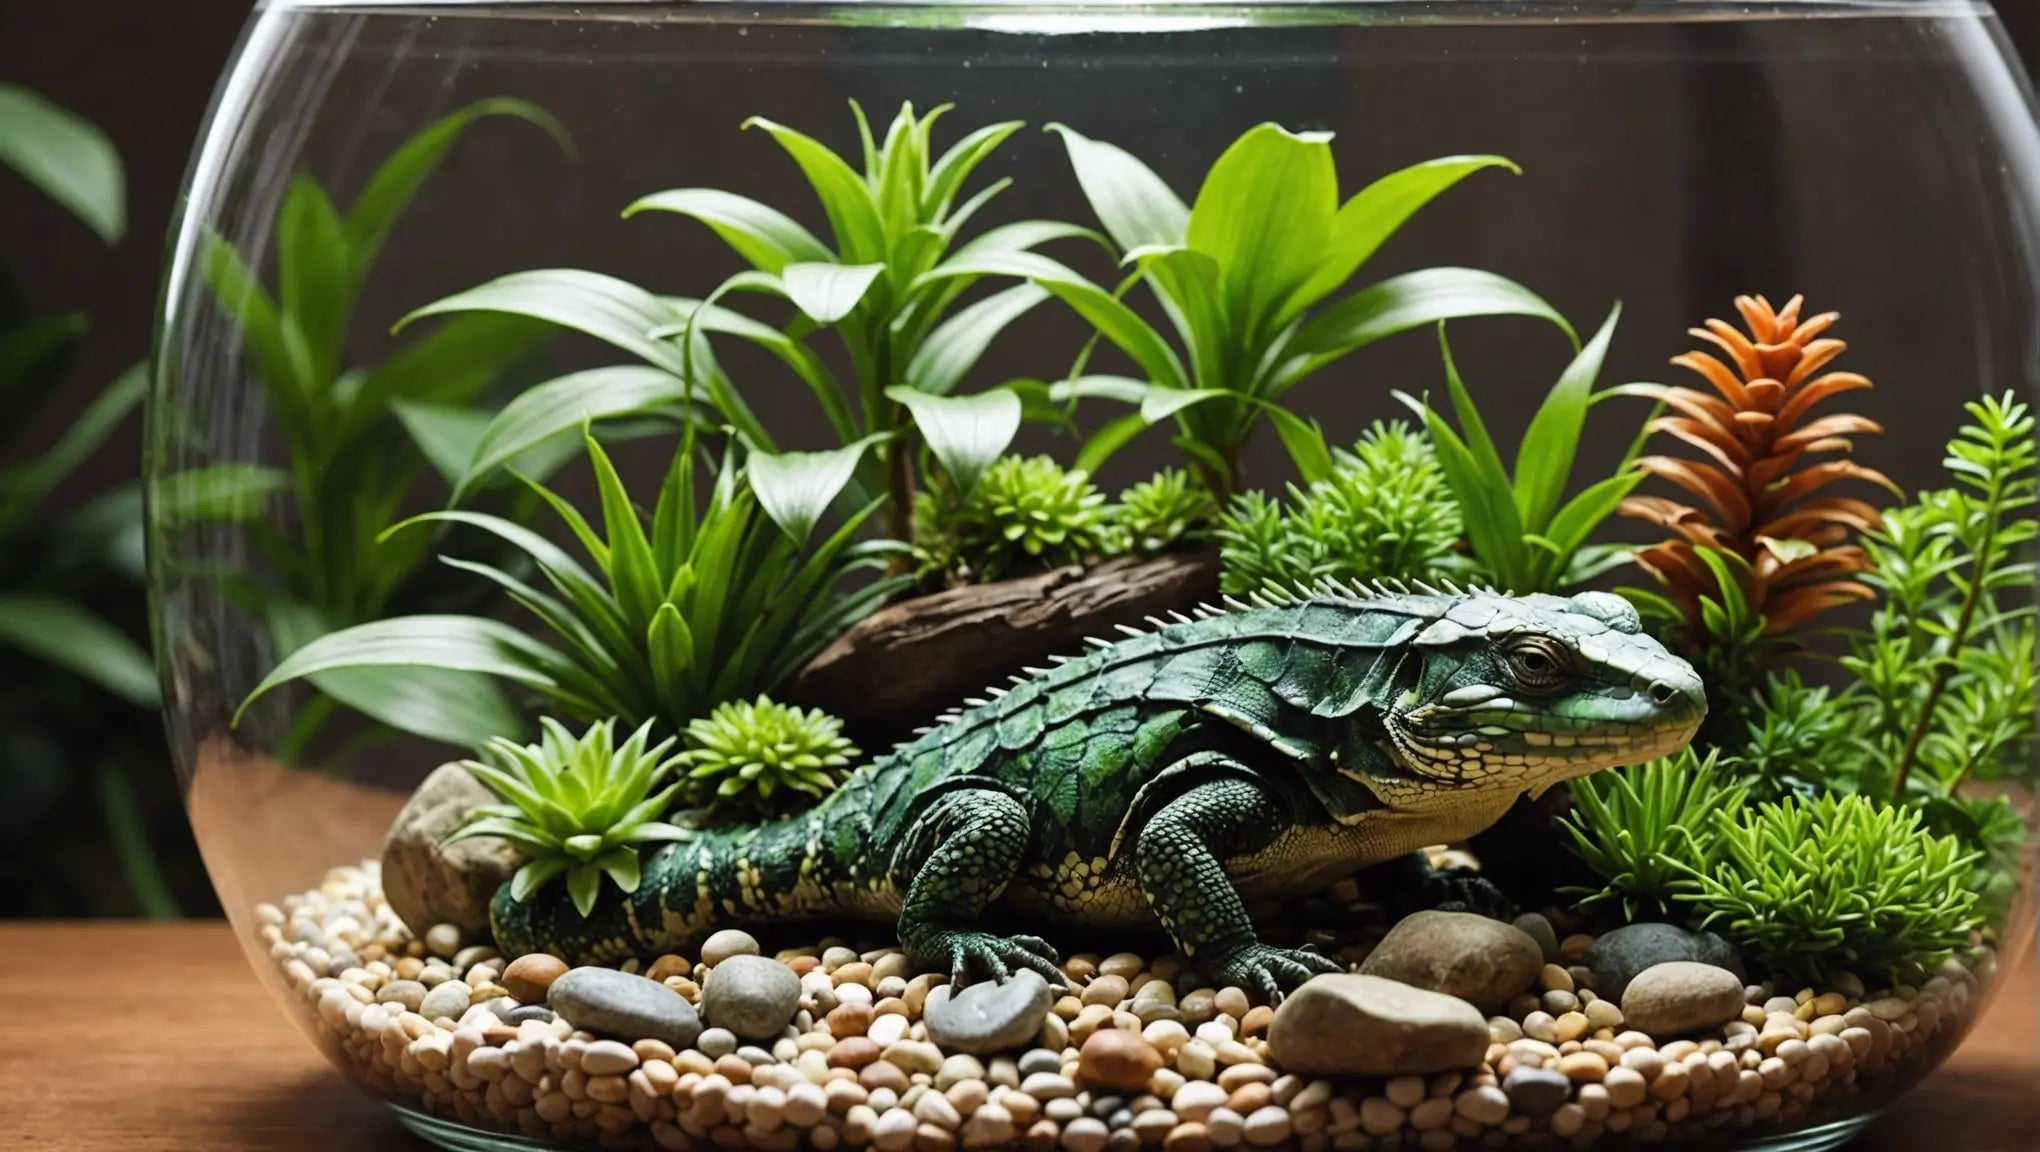 Enhance Your Reptile Habitat with Stylish Ornaments